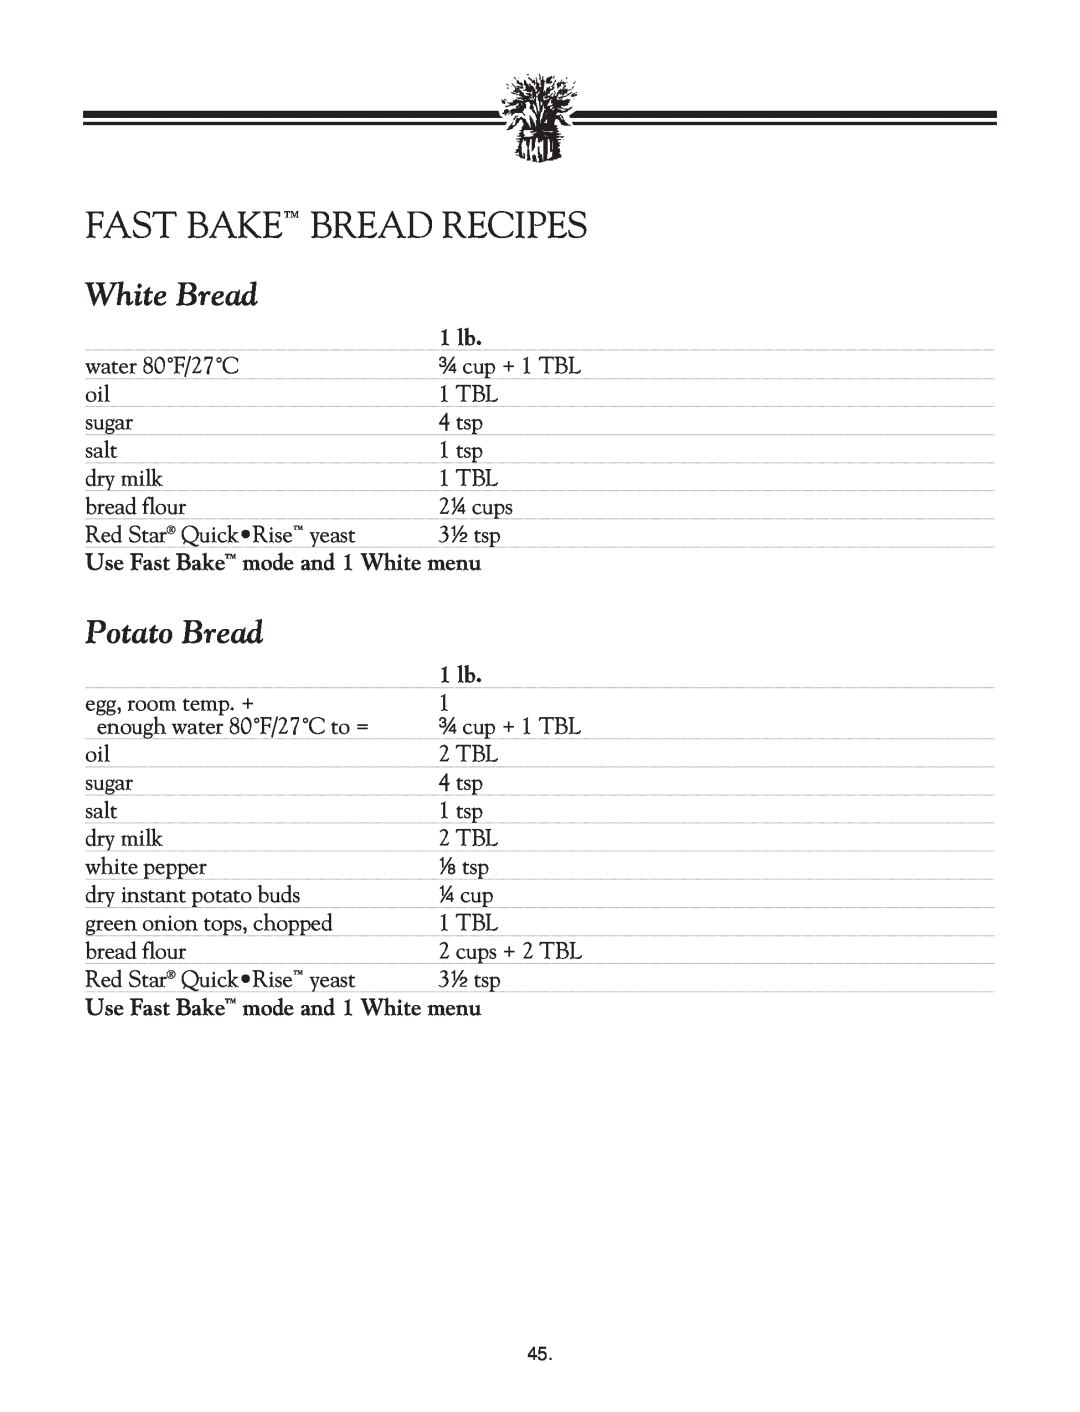 Breadman TR2828G Fast Bake Bread Recipes, White Bread, Potato Bread, 1 lb, Use Fast Bake mode and 1 White menu 